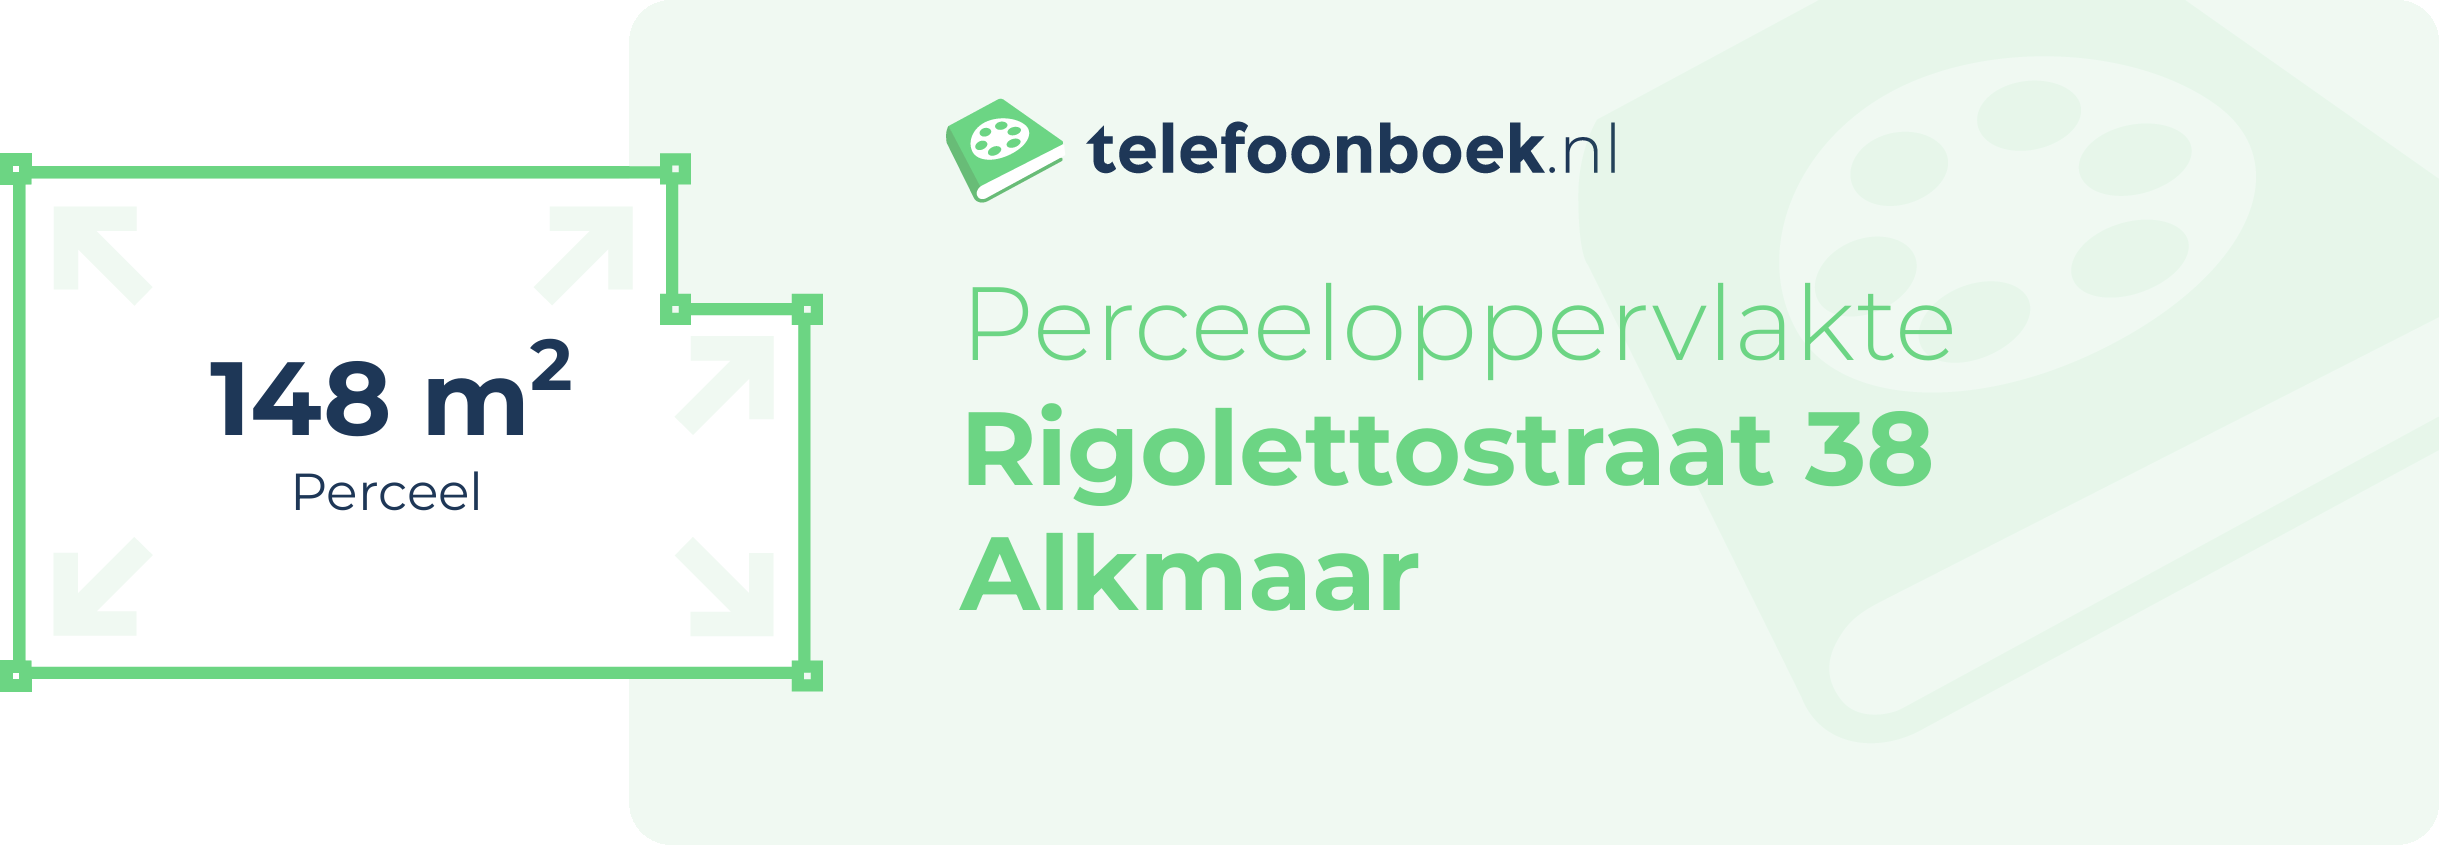 Perceeloppervlakte Rigolettostraat 38 Alkmaar